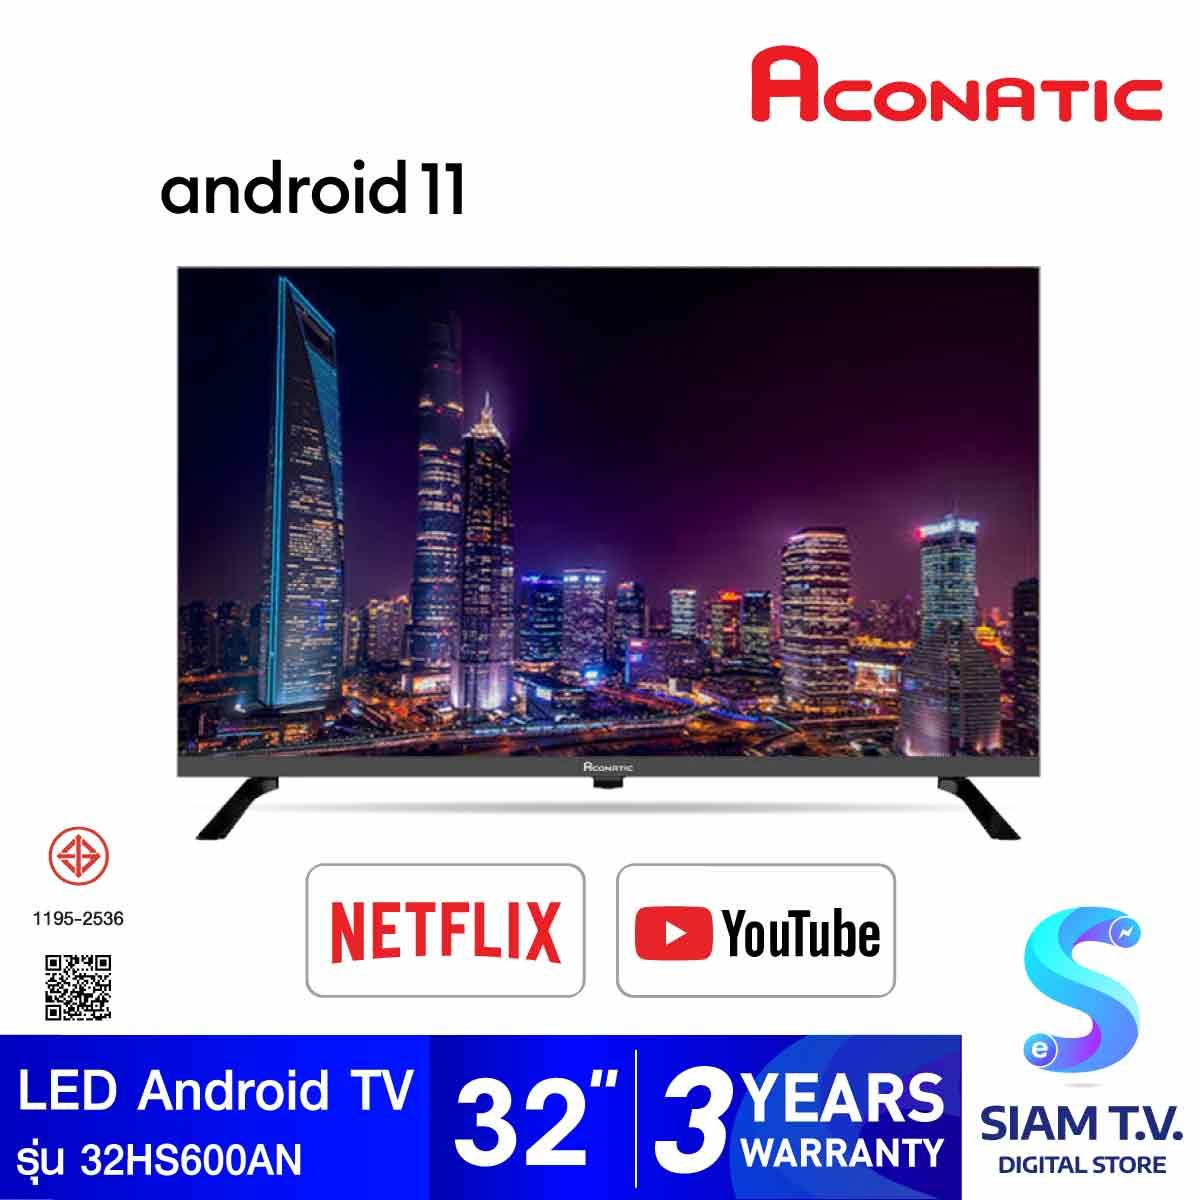 ACONATIC LED Andriod TV รุ่น 32HS600AN แอนดรอย์ทีวี 32 นิ้ว Android 11